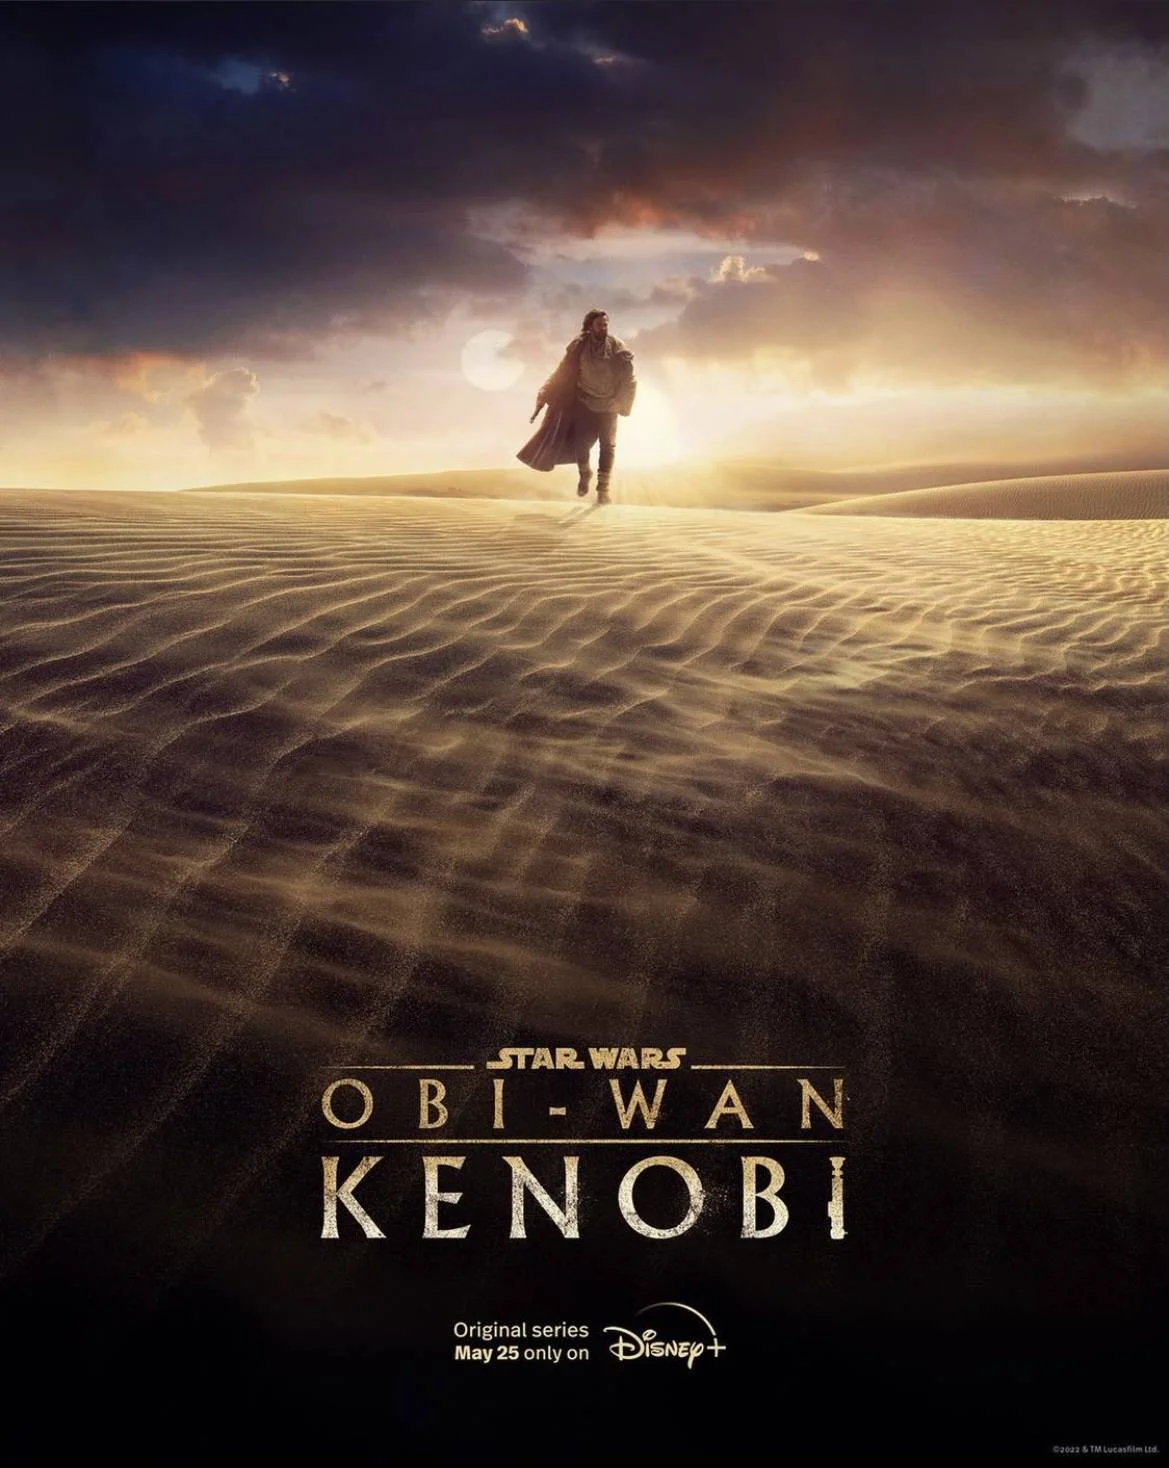 John Williams Records "Obi-Wan Kenobi" Theme Again